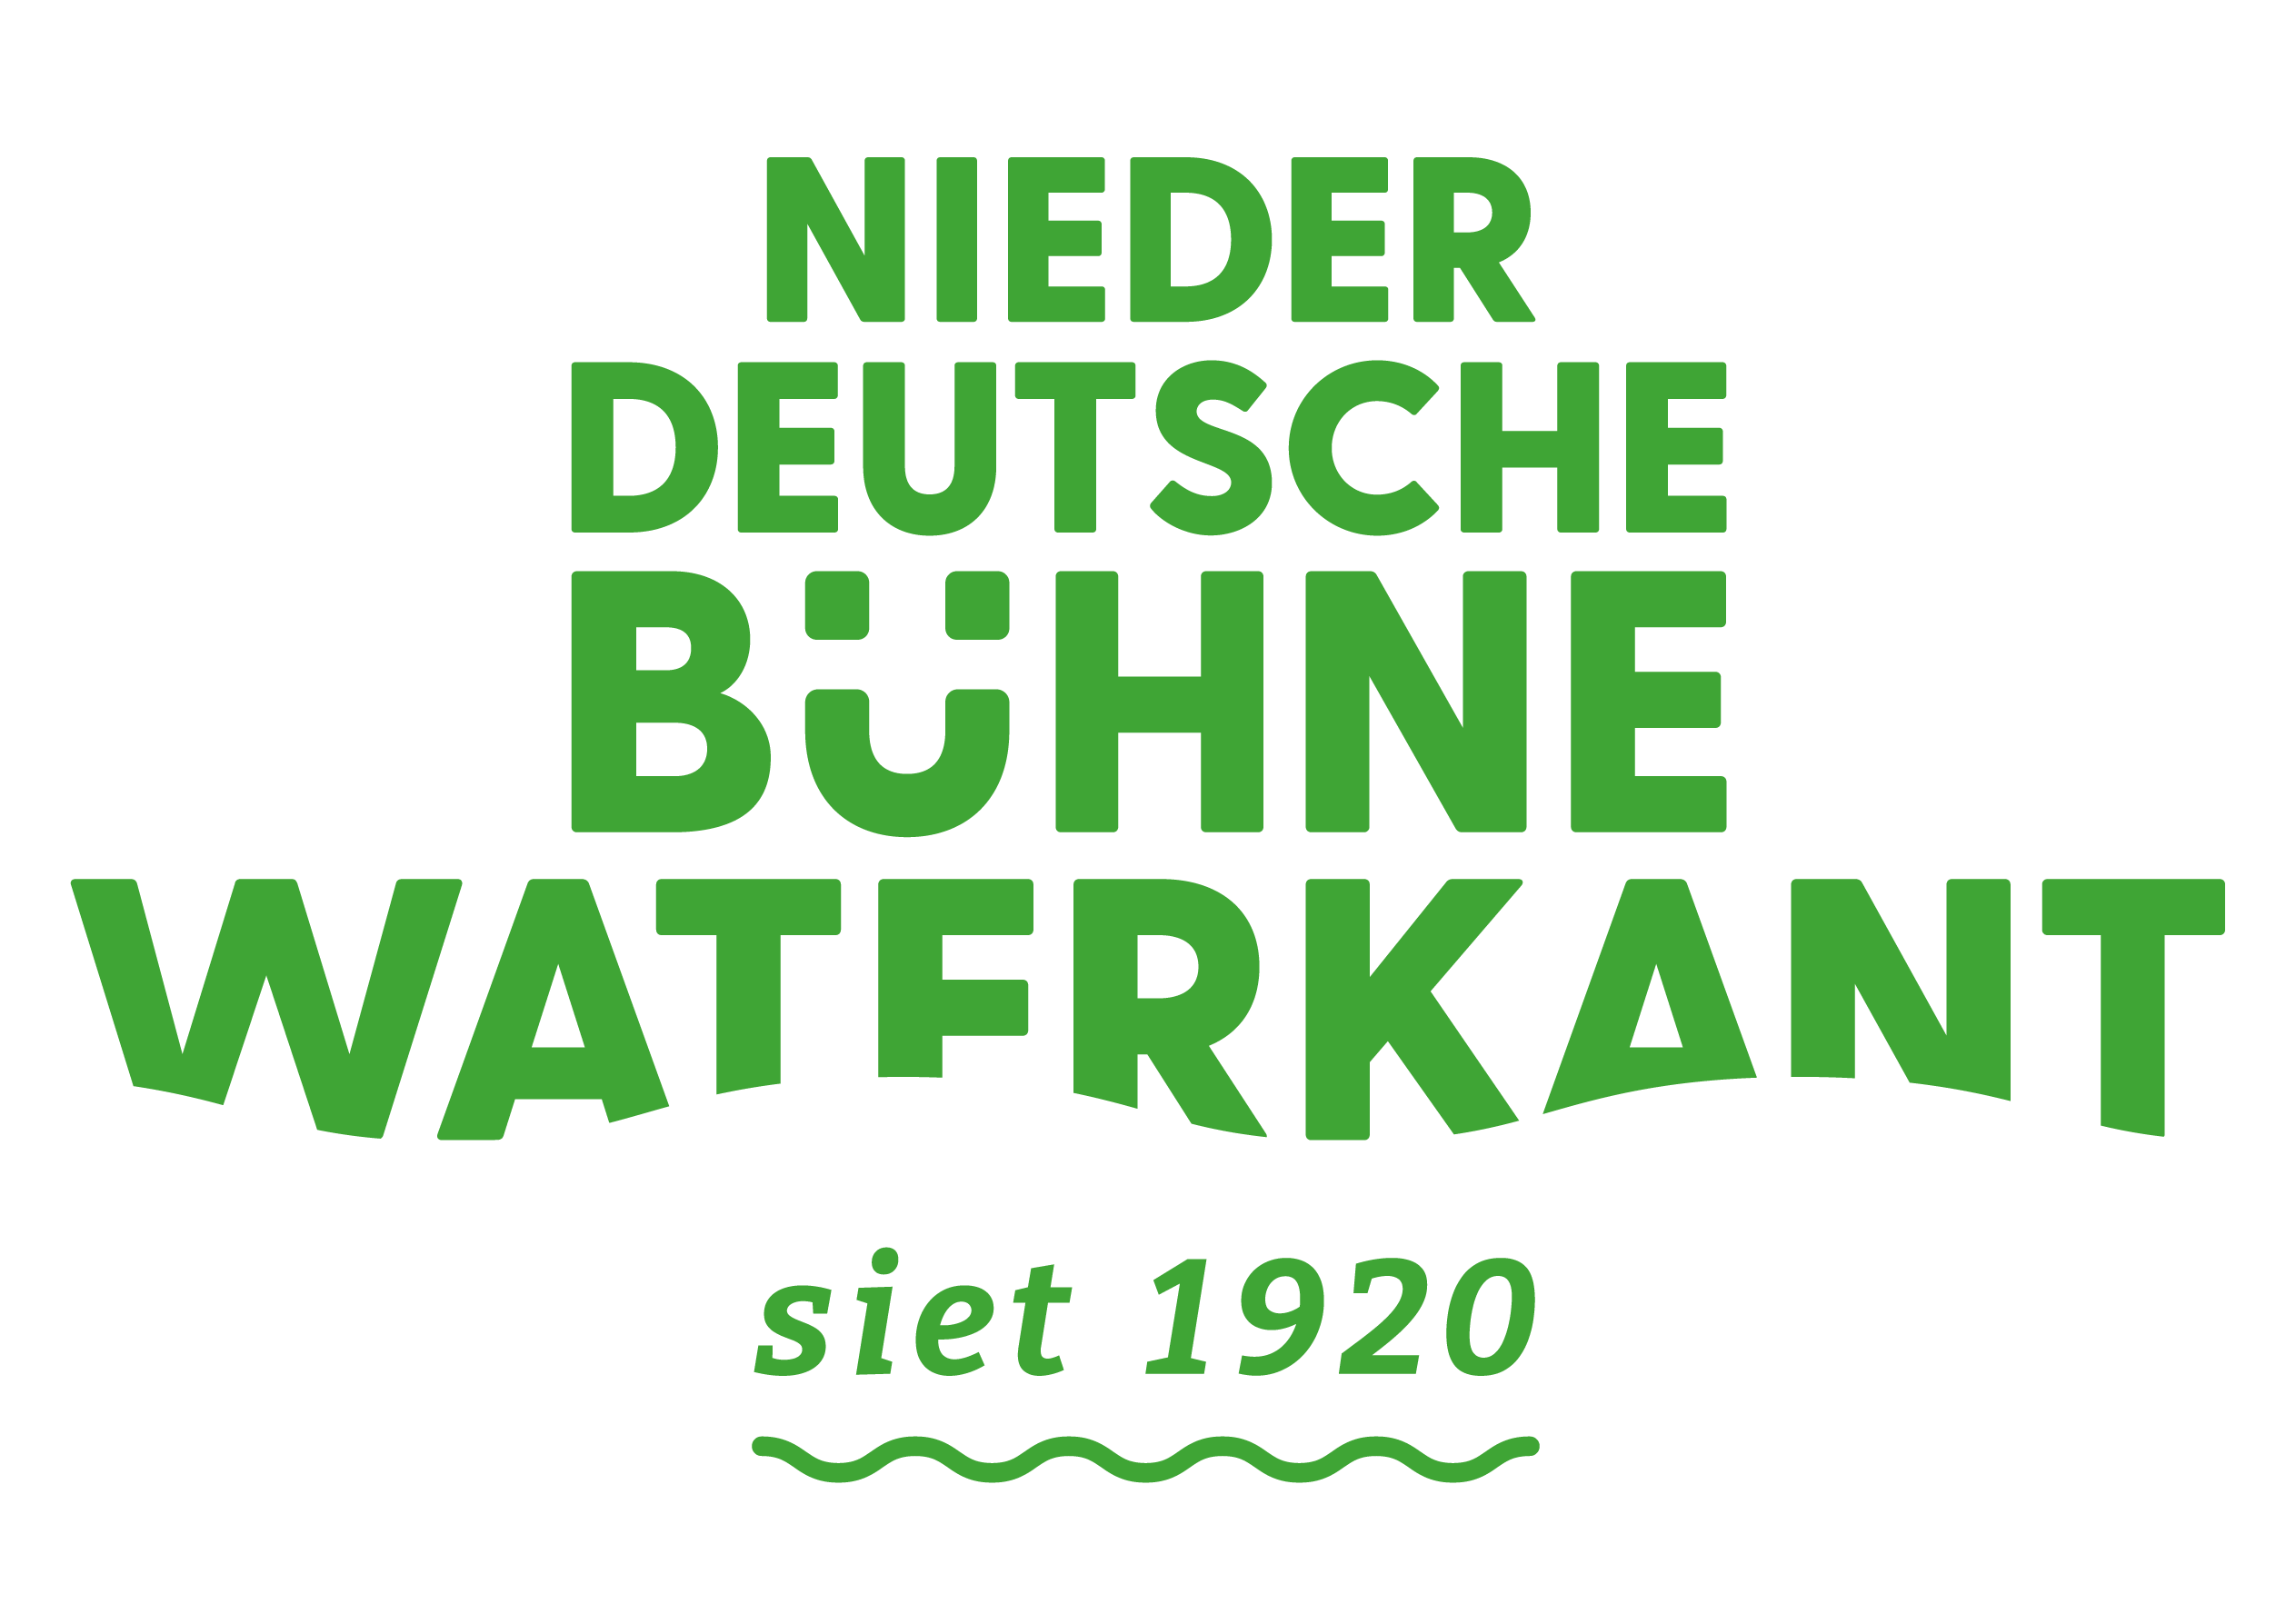 Niederdeutsche Bühne Waterkant Bremerhaven e.V. (c) NDB Waterkant